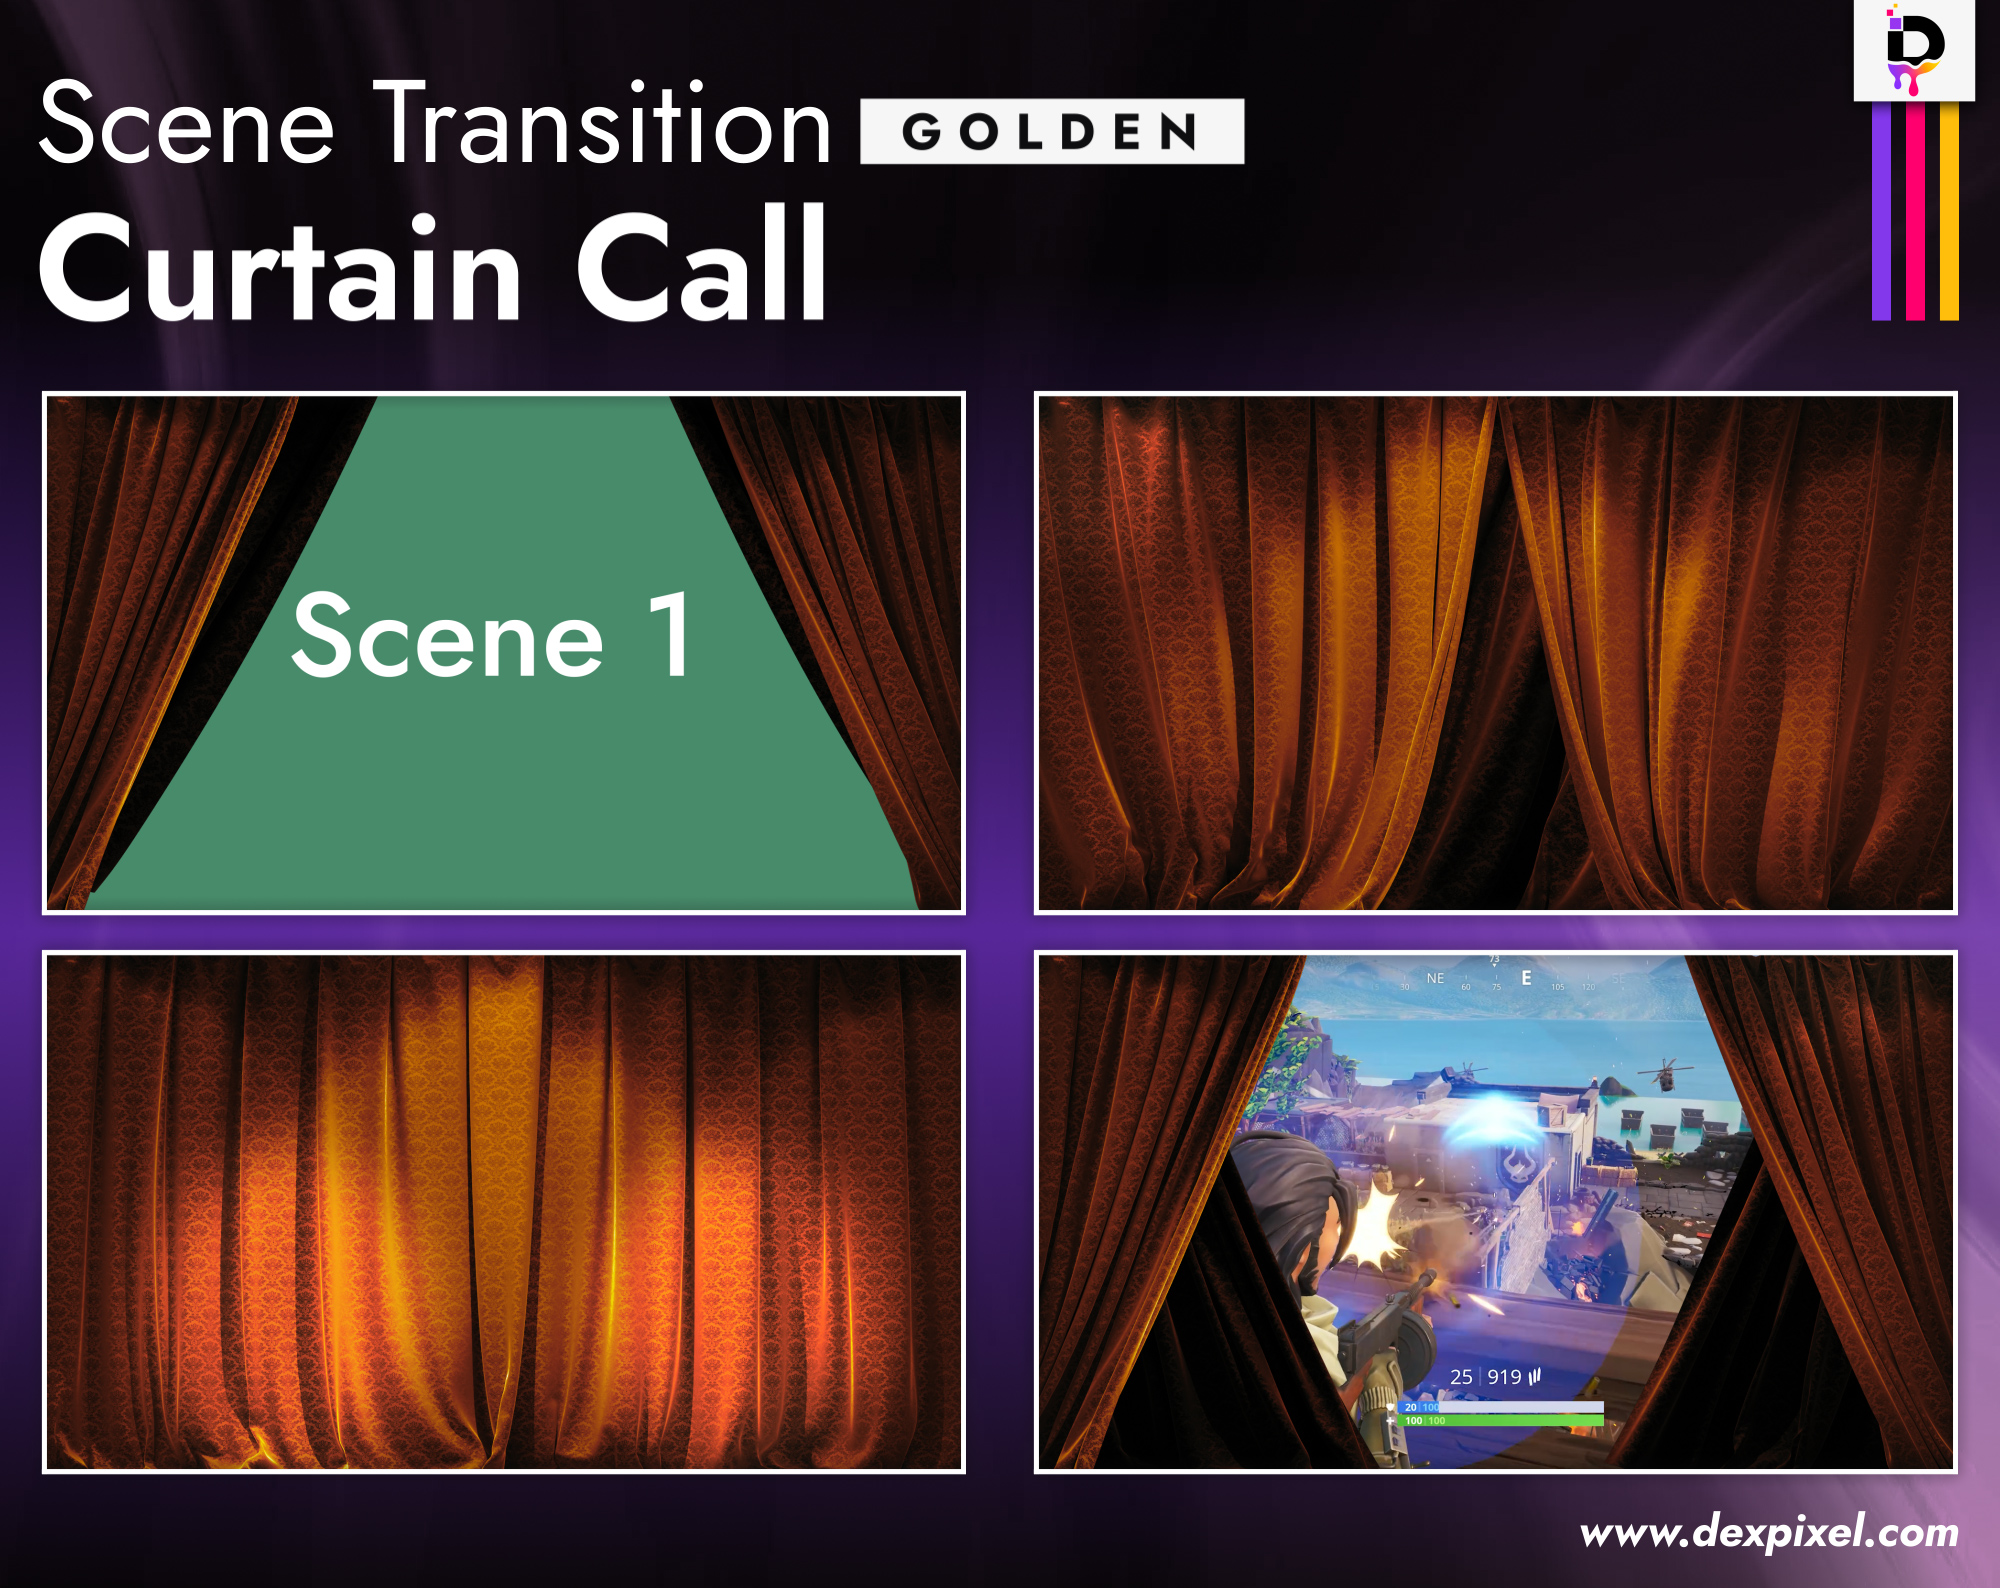 Scene Transition Dexpixel Curtain Call Golden